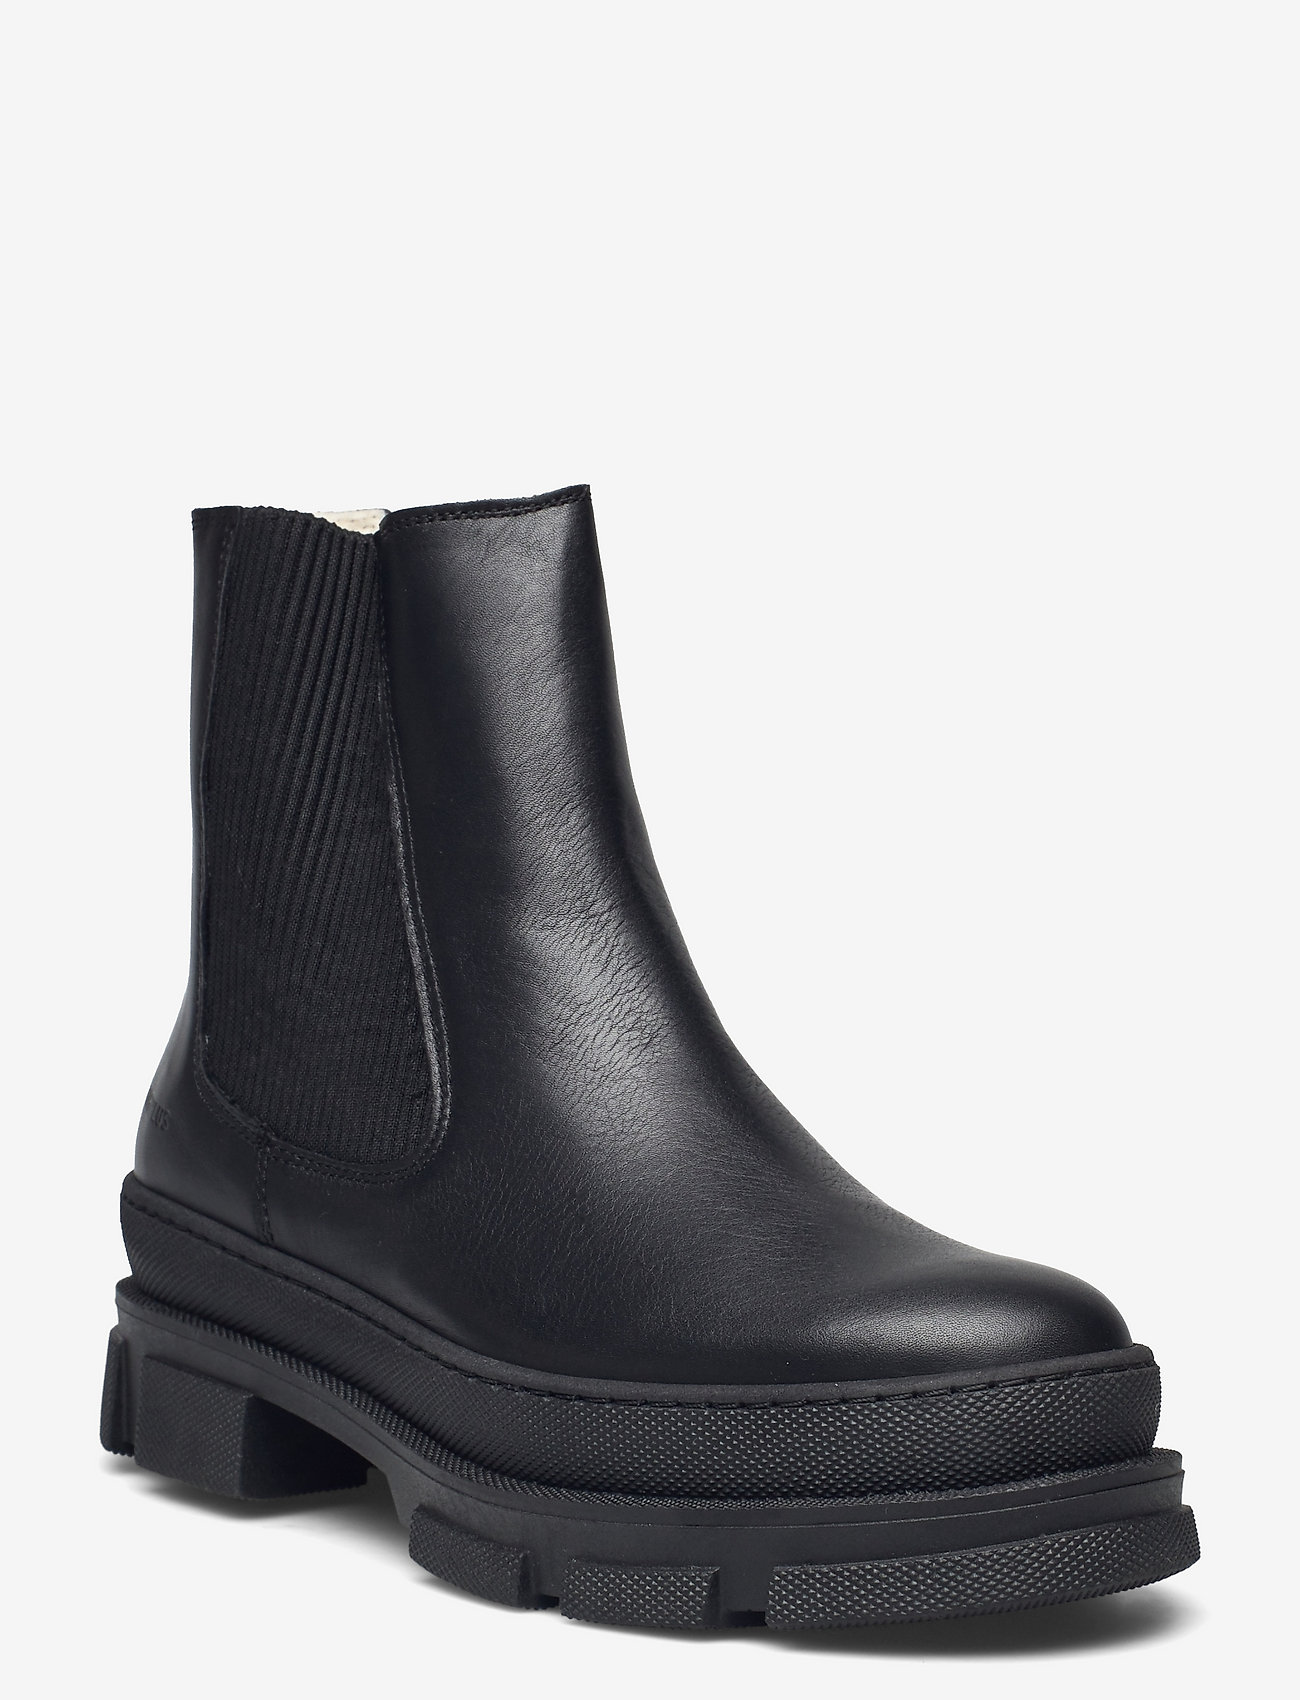 ANGULUS - Boots - flat - chelsea stila zābaki - 1604/019 black/black - 0